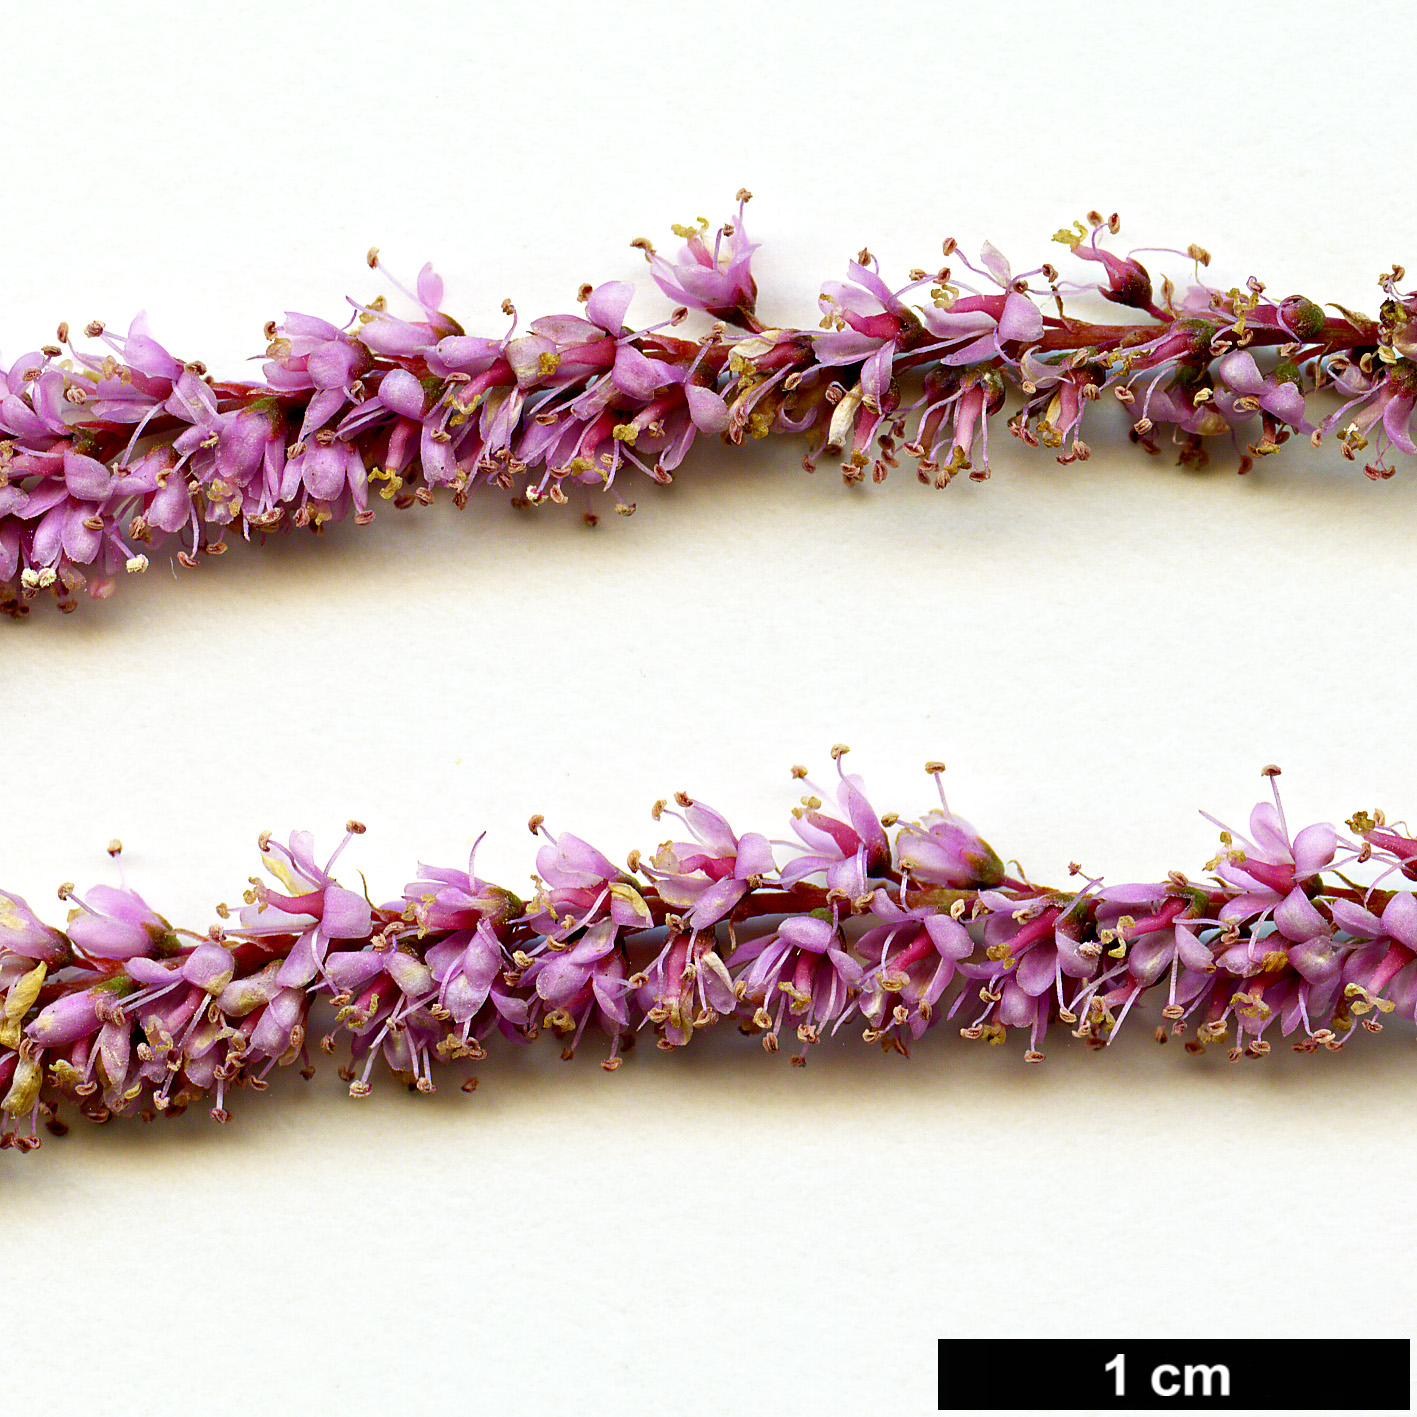 High resolution image: Family: Tamaricaceae - Genus: Tamarix - Taxon: ramosissima